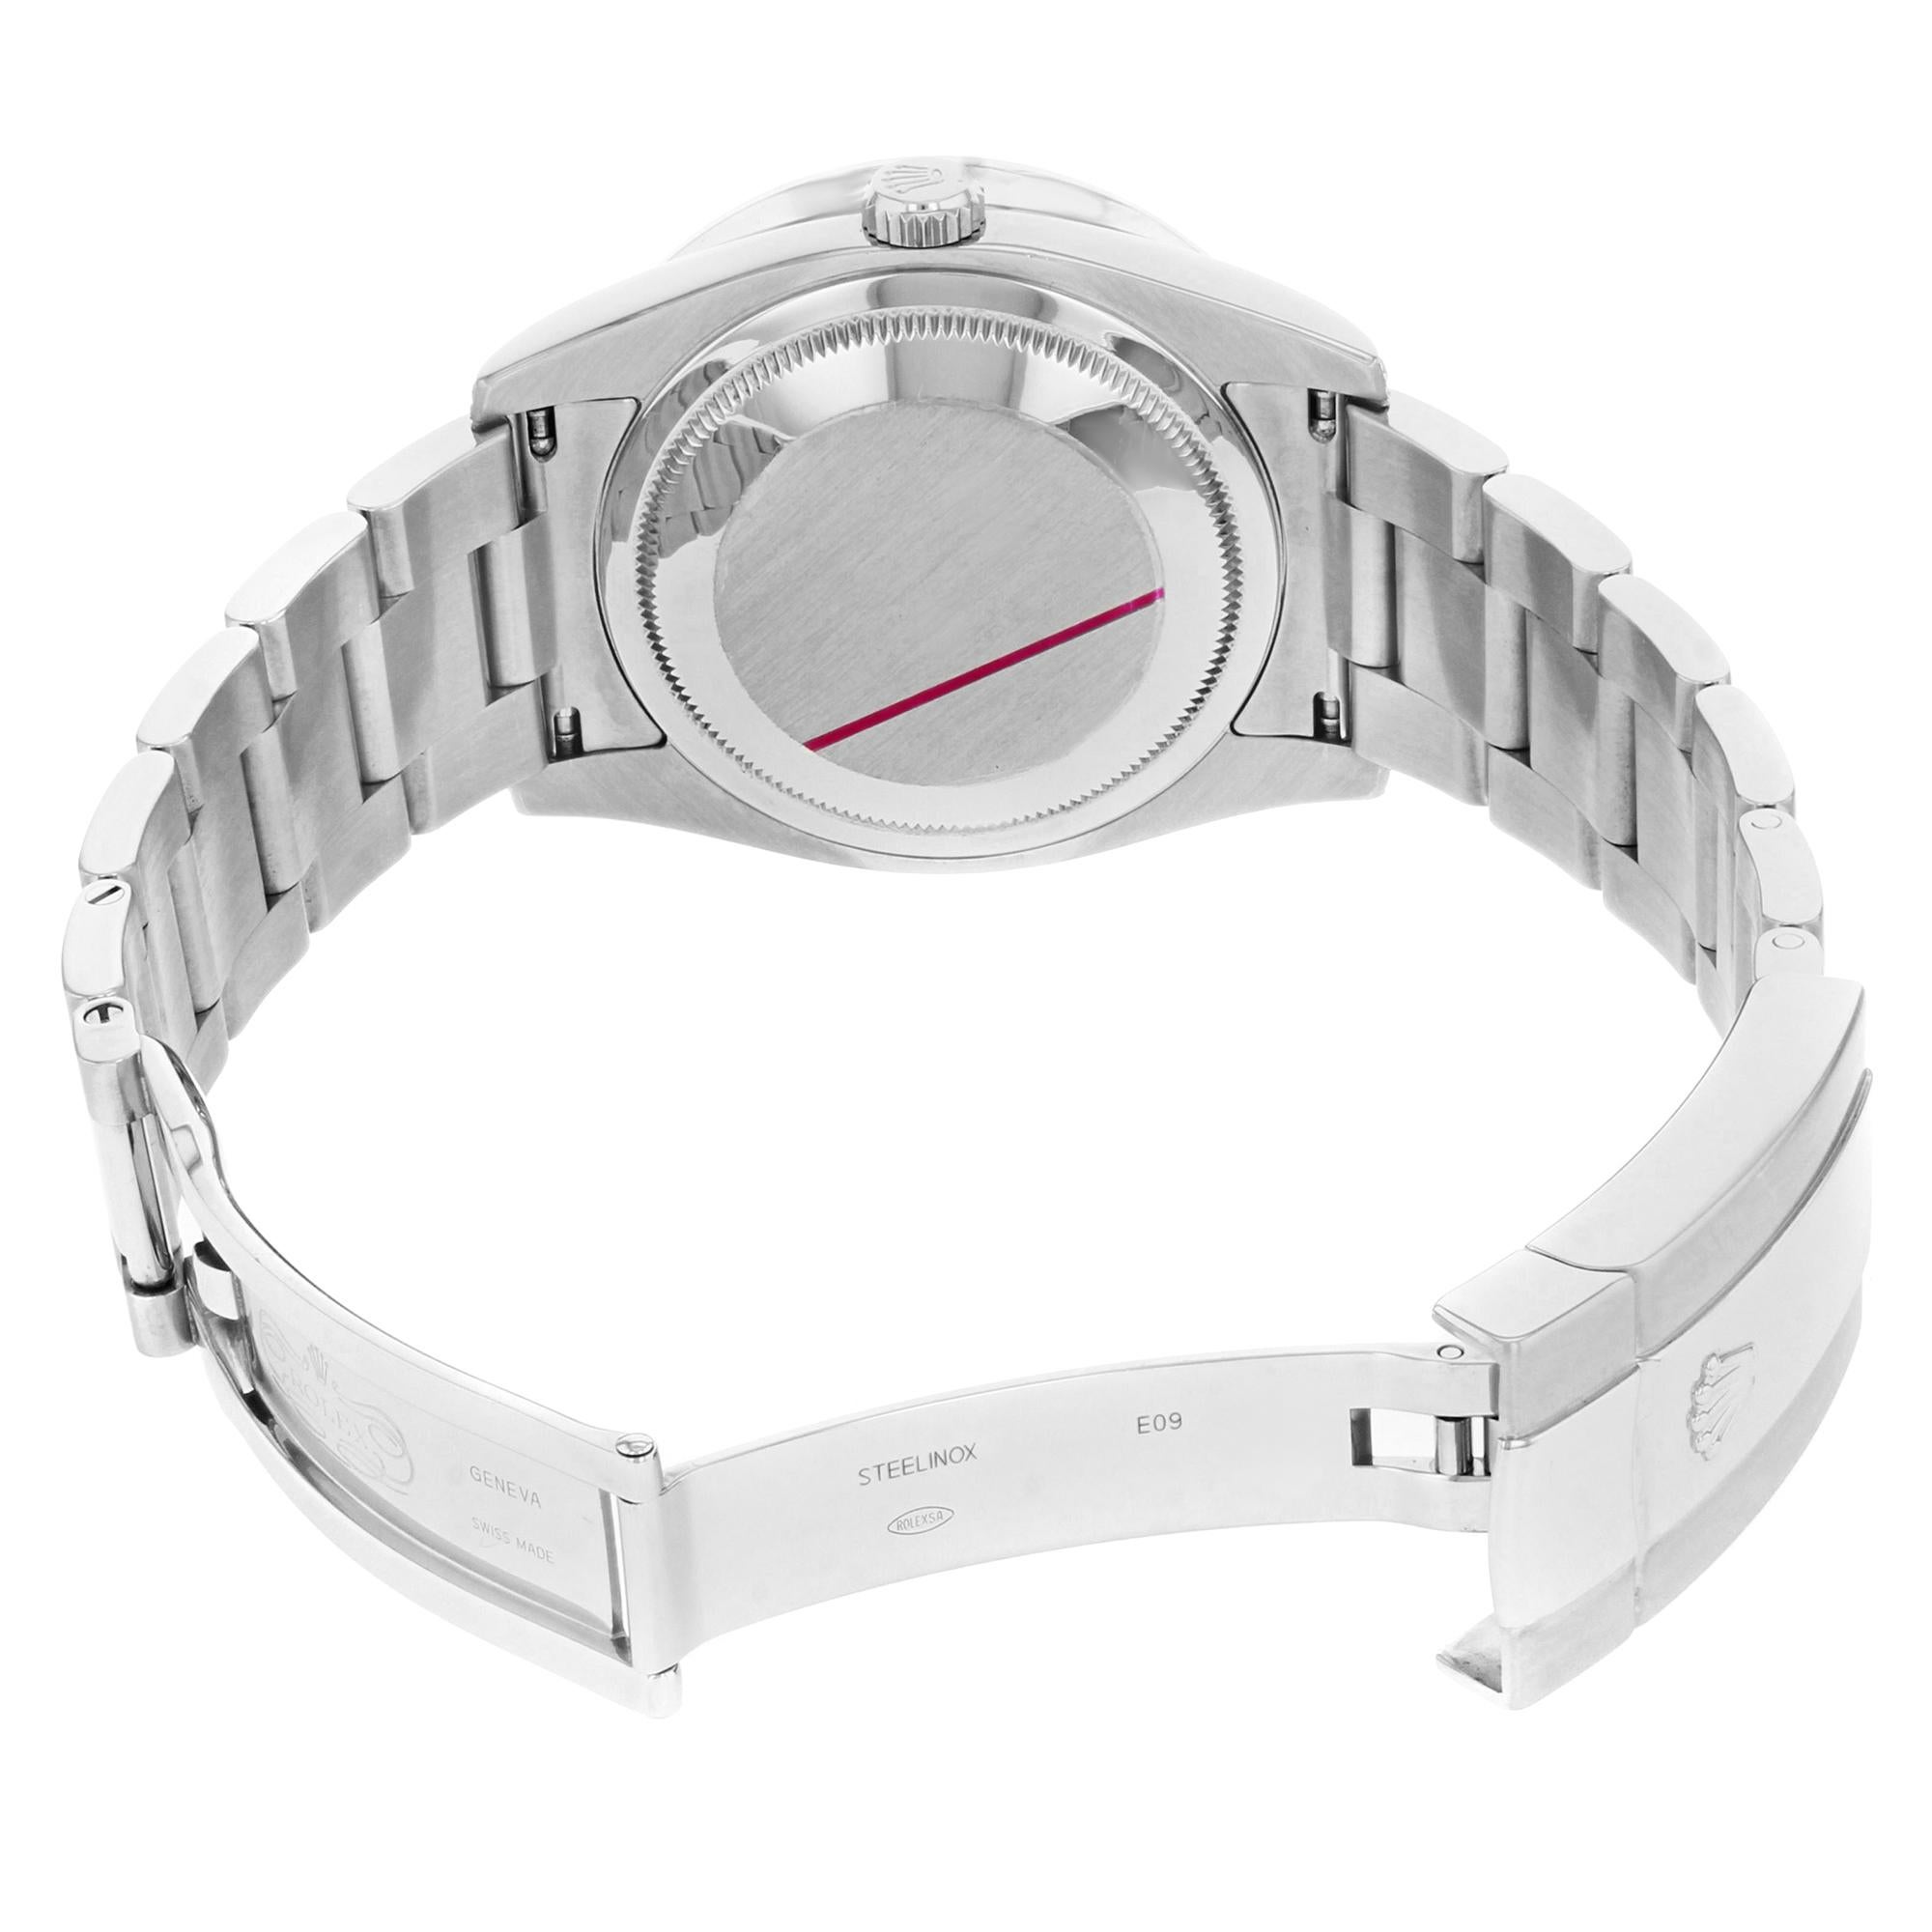 Men's Rolex Stainless Steel Diamond Datejust Automatic Wristwatch Ref 116234, 2008